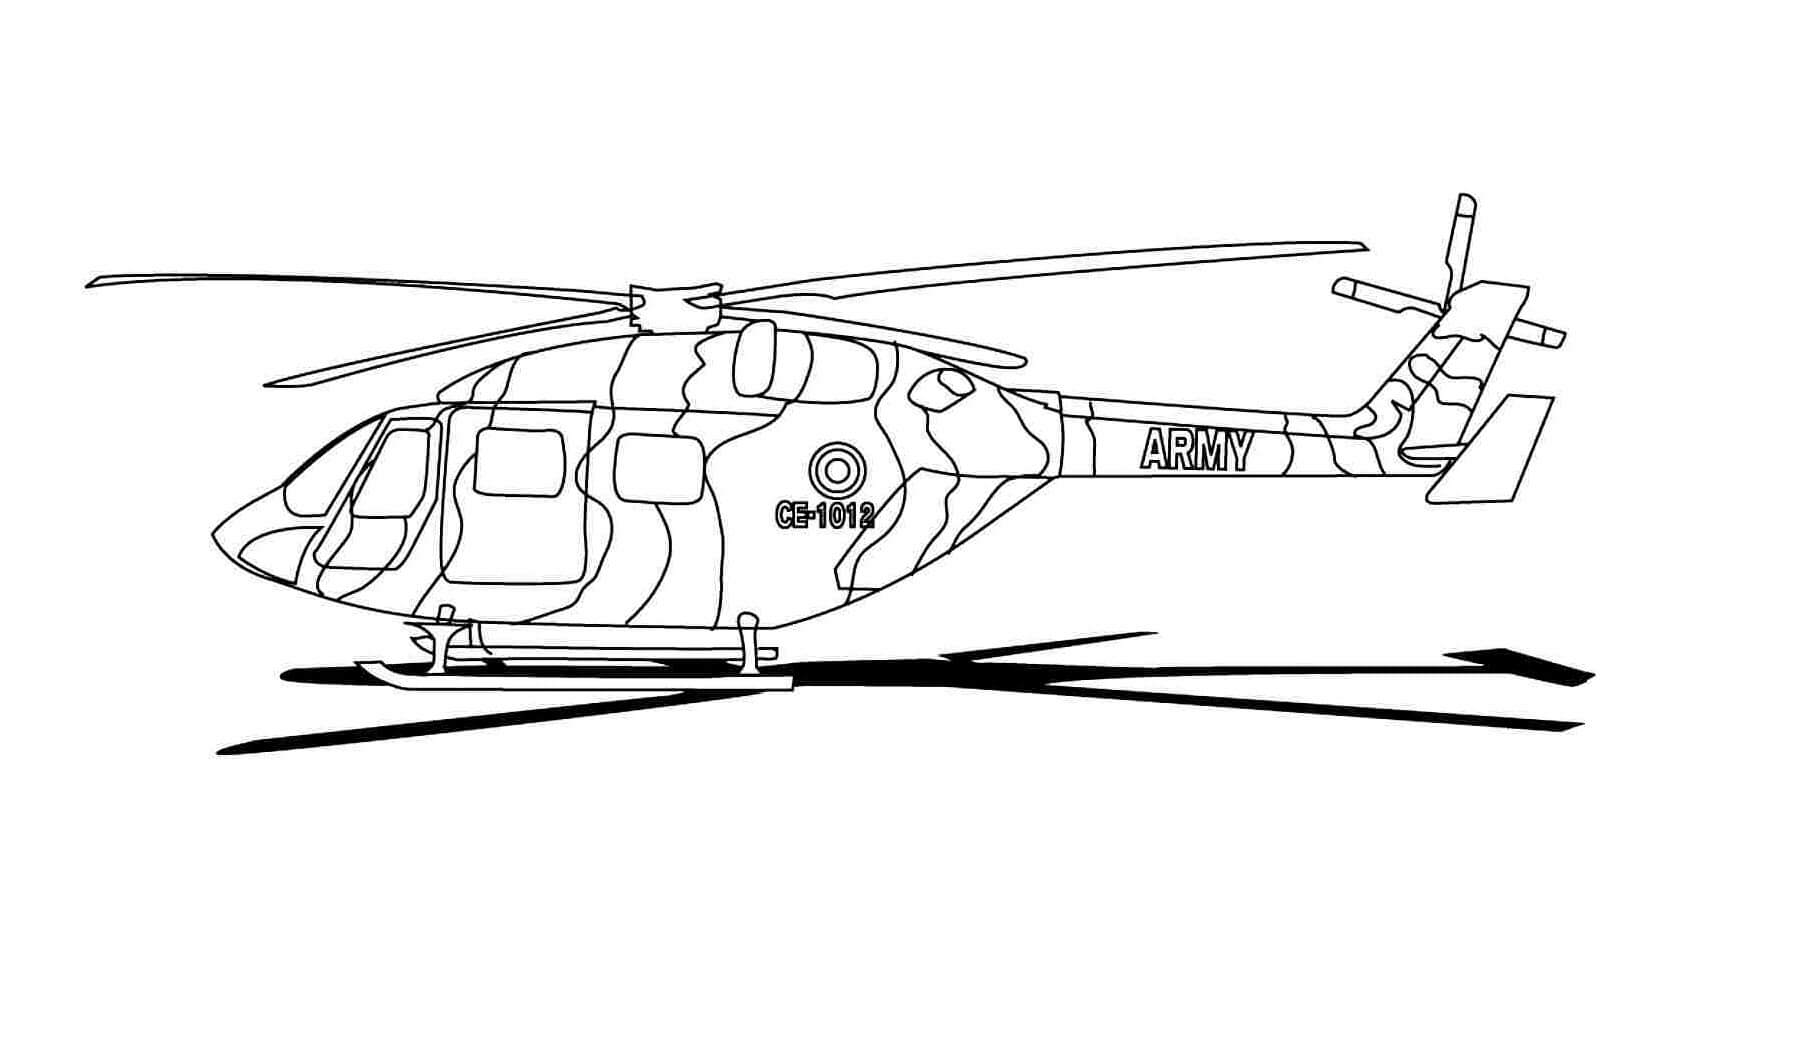 Helicóptero CE-1020